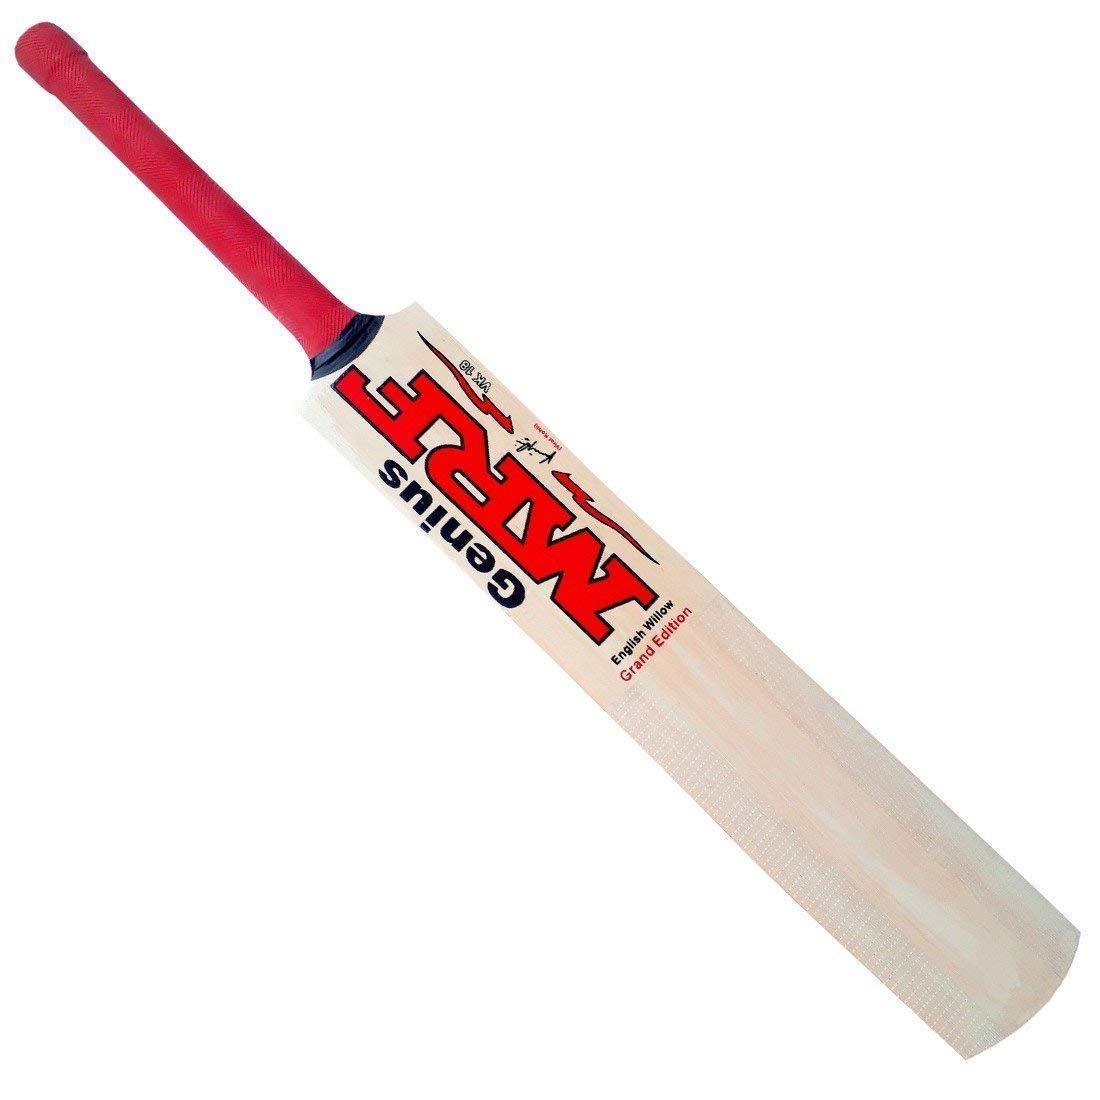 MRF Cricket bat